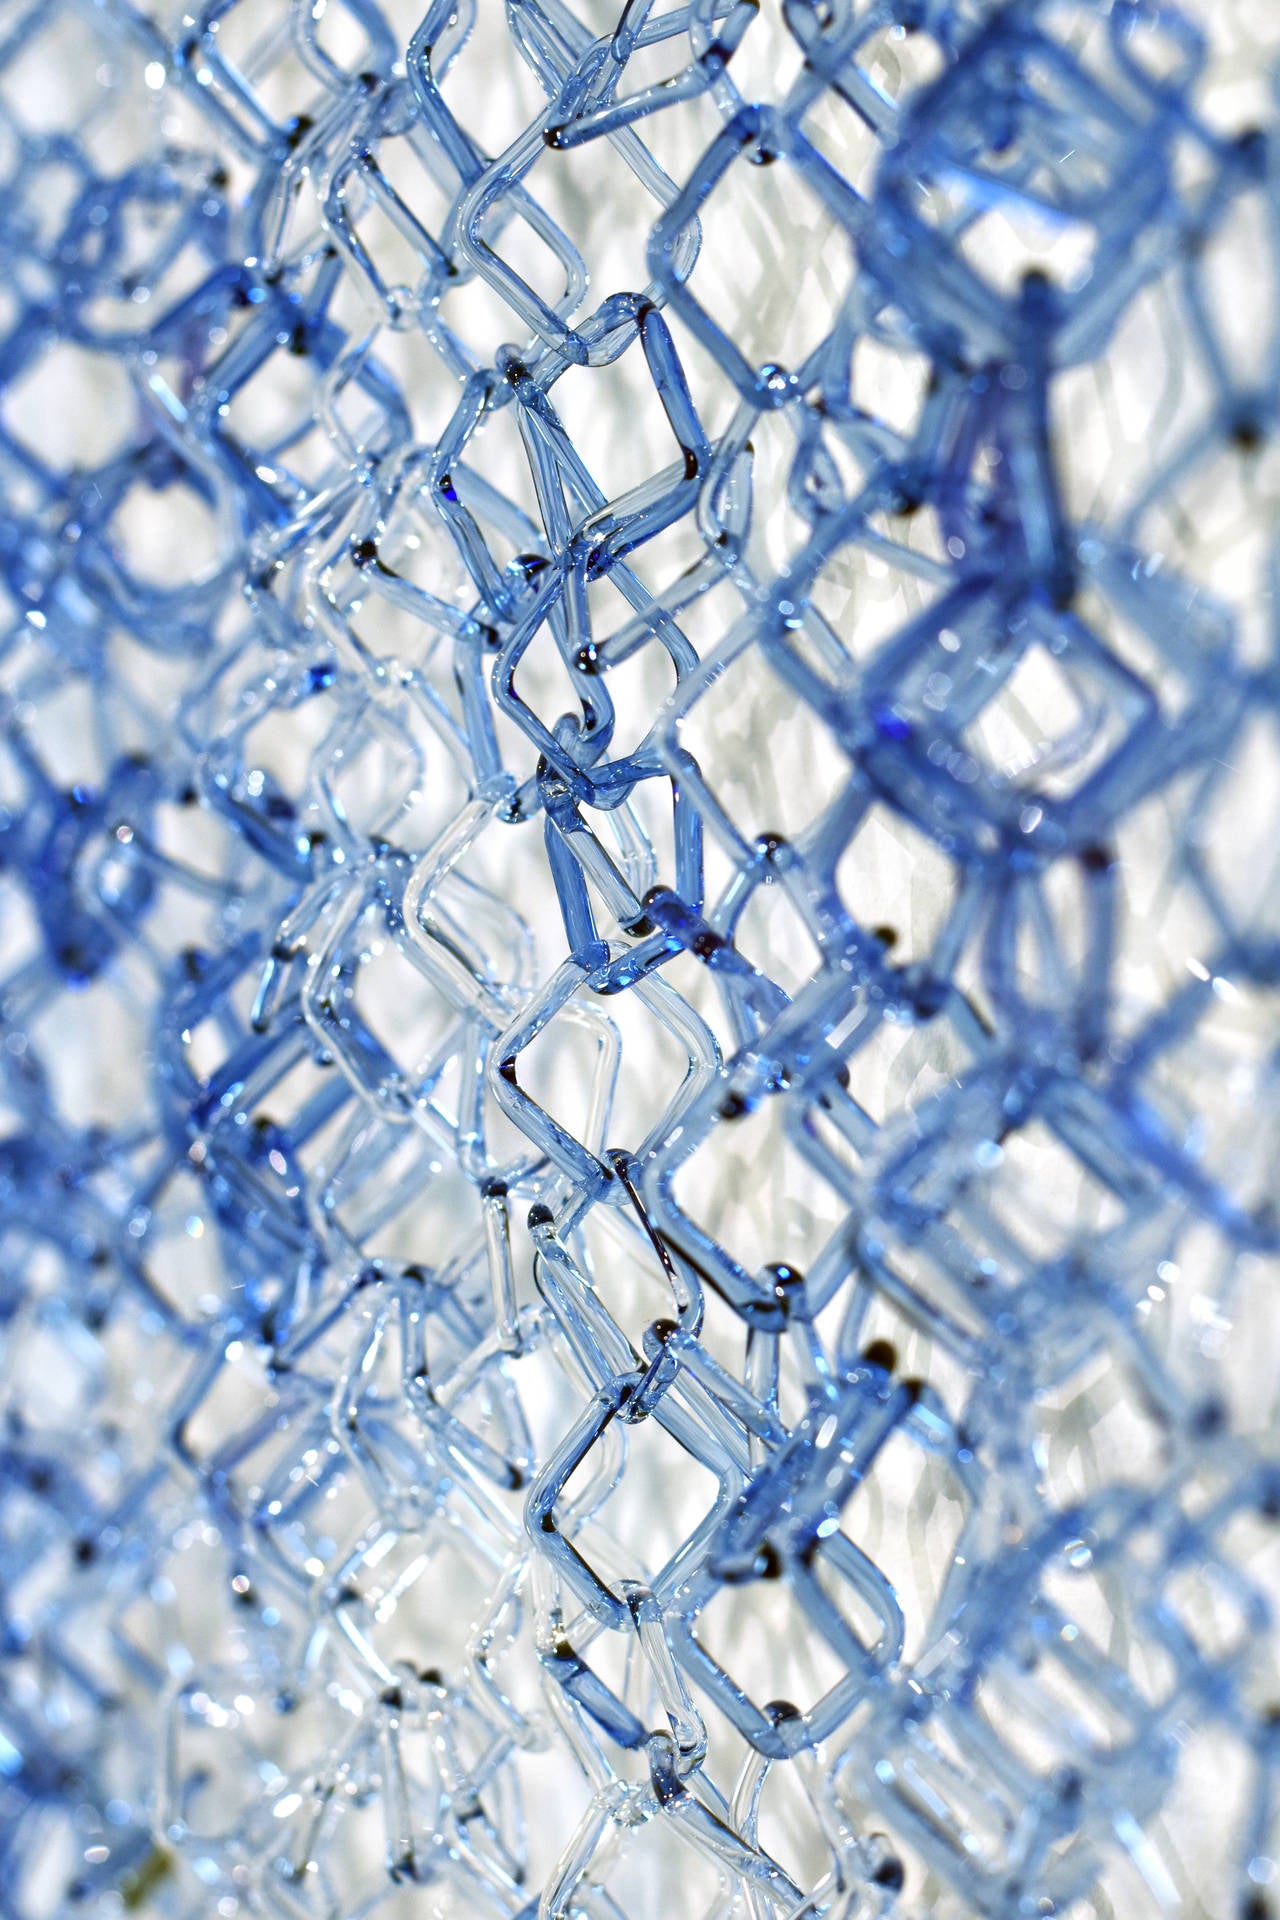 David Licata, Blue Fade, 2014
torch-worked borosilicate glass
50 x 20 x 1 inches
$6,000